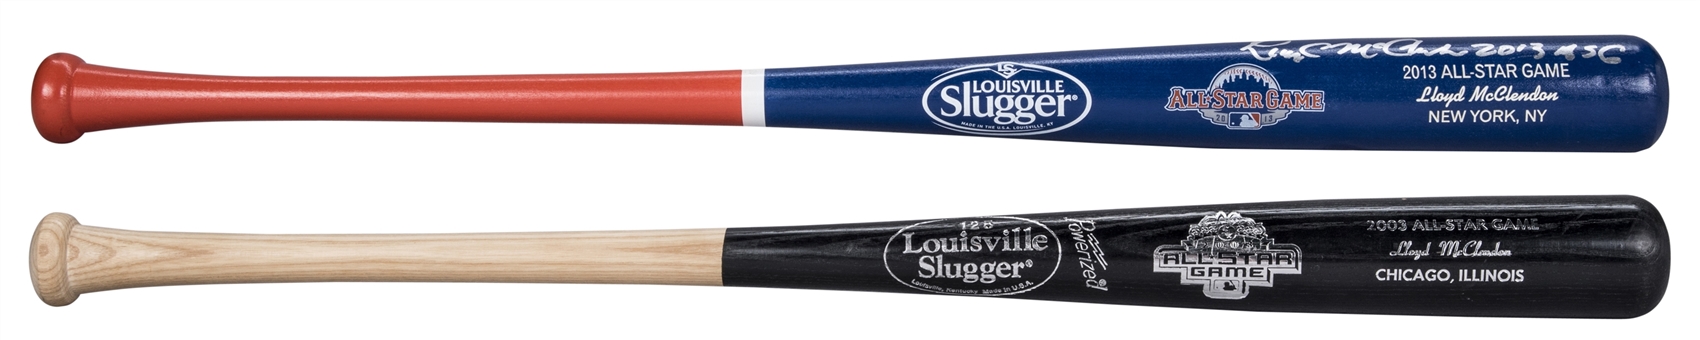 Lot of (2) 2003/2013 Lloyd McClendon Commemorative All-Star Game Louisville Slugger Bats (1 Signed) (Beckett)